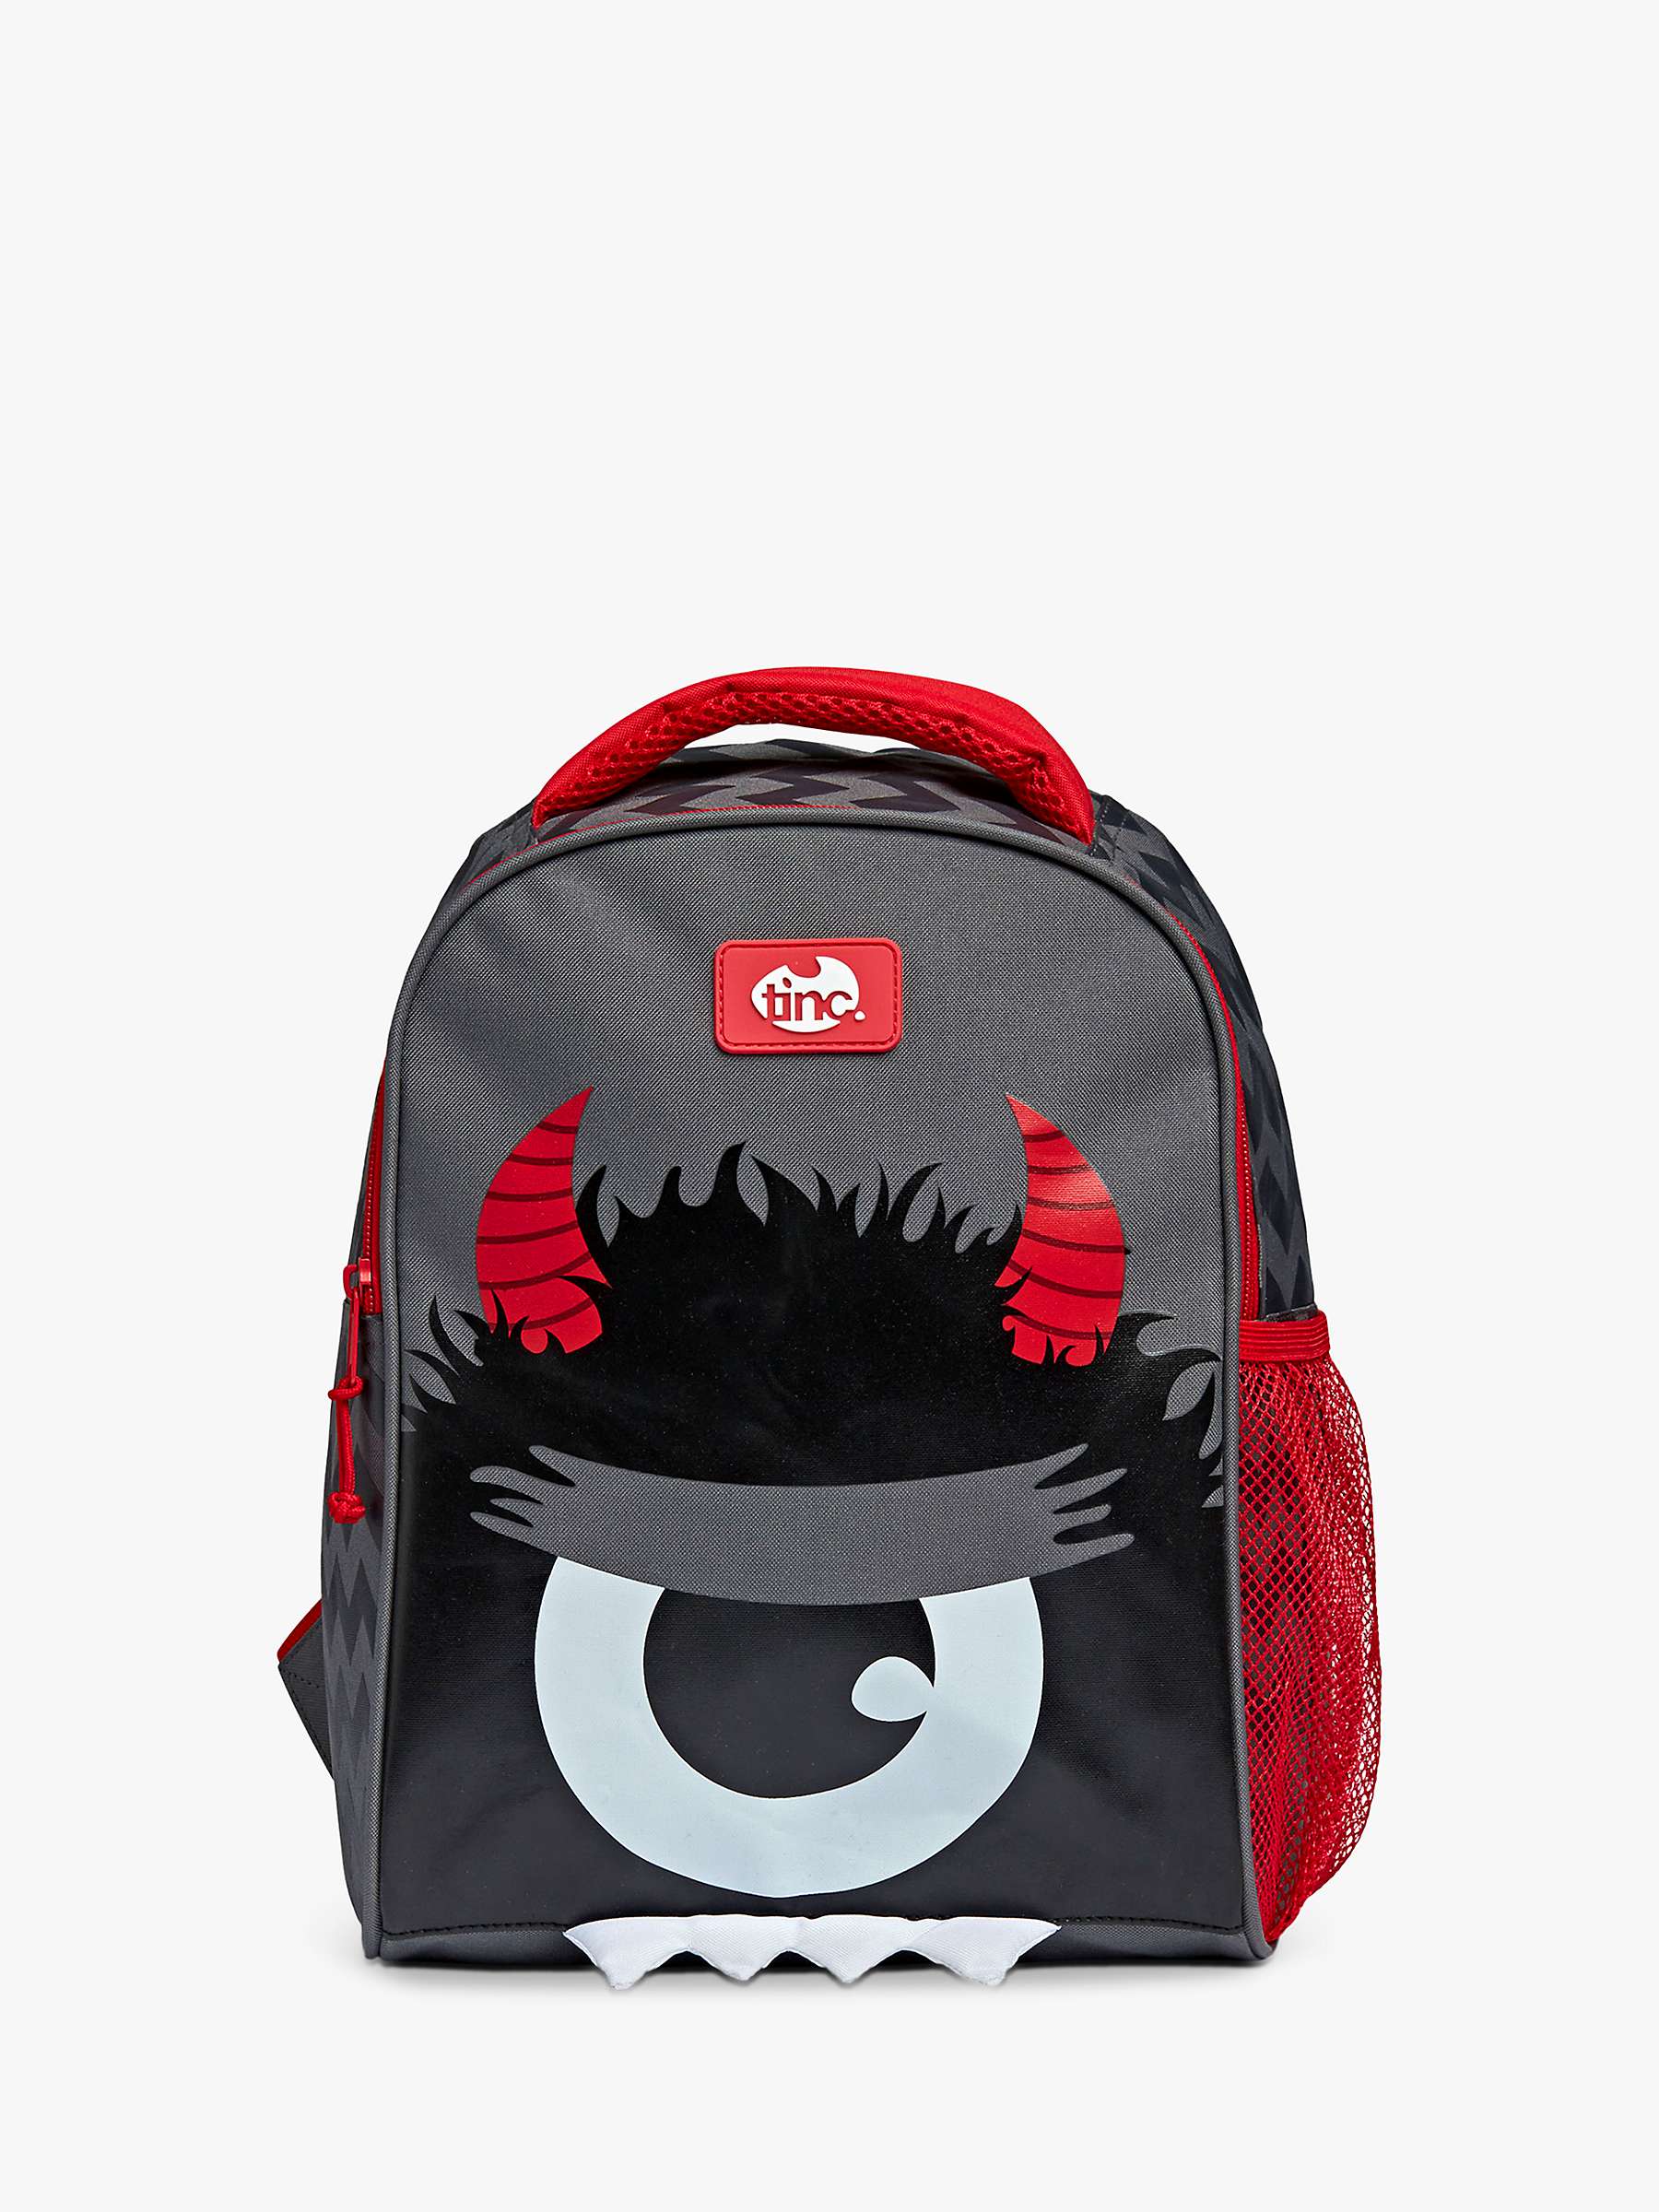 Buy Tinc Kronk Monster Children's Backpack, Black/Red Online at johnlewis.com